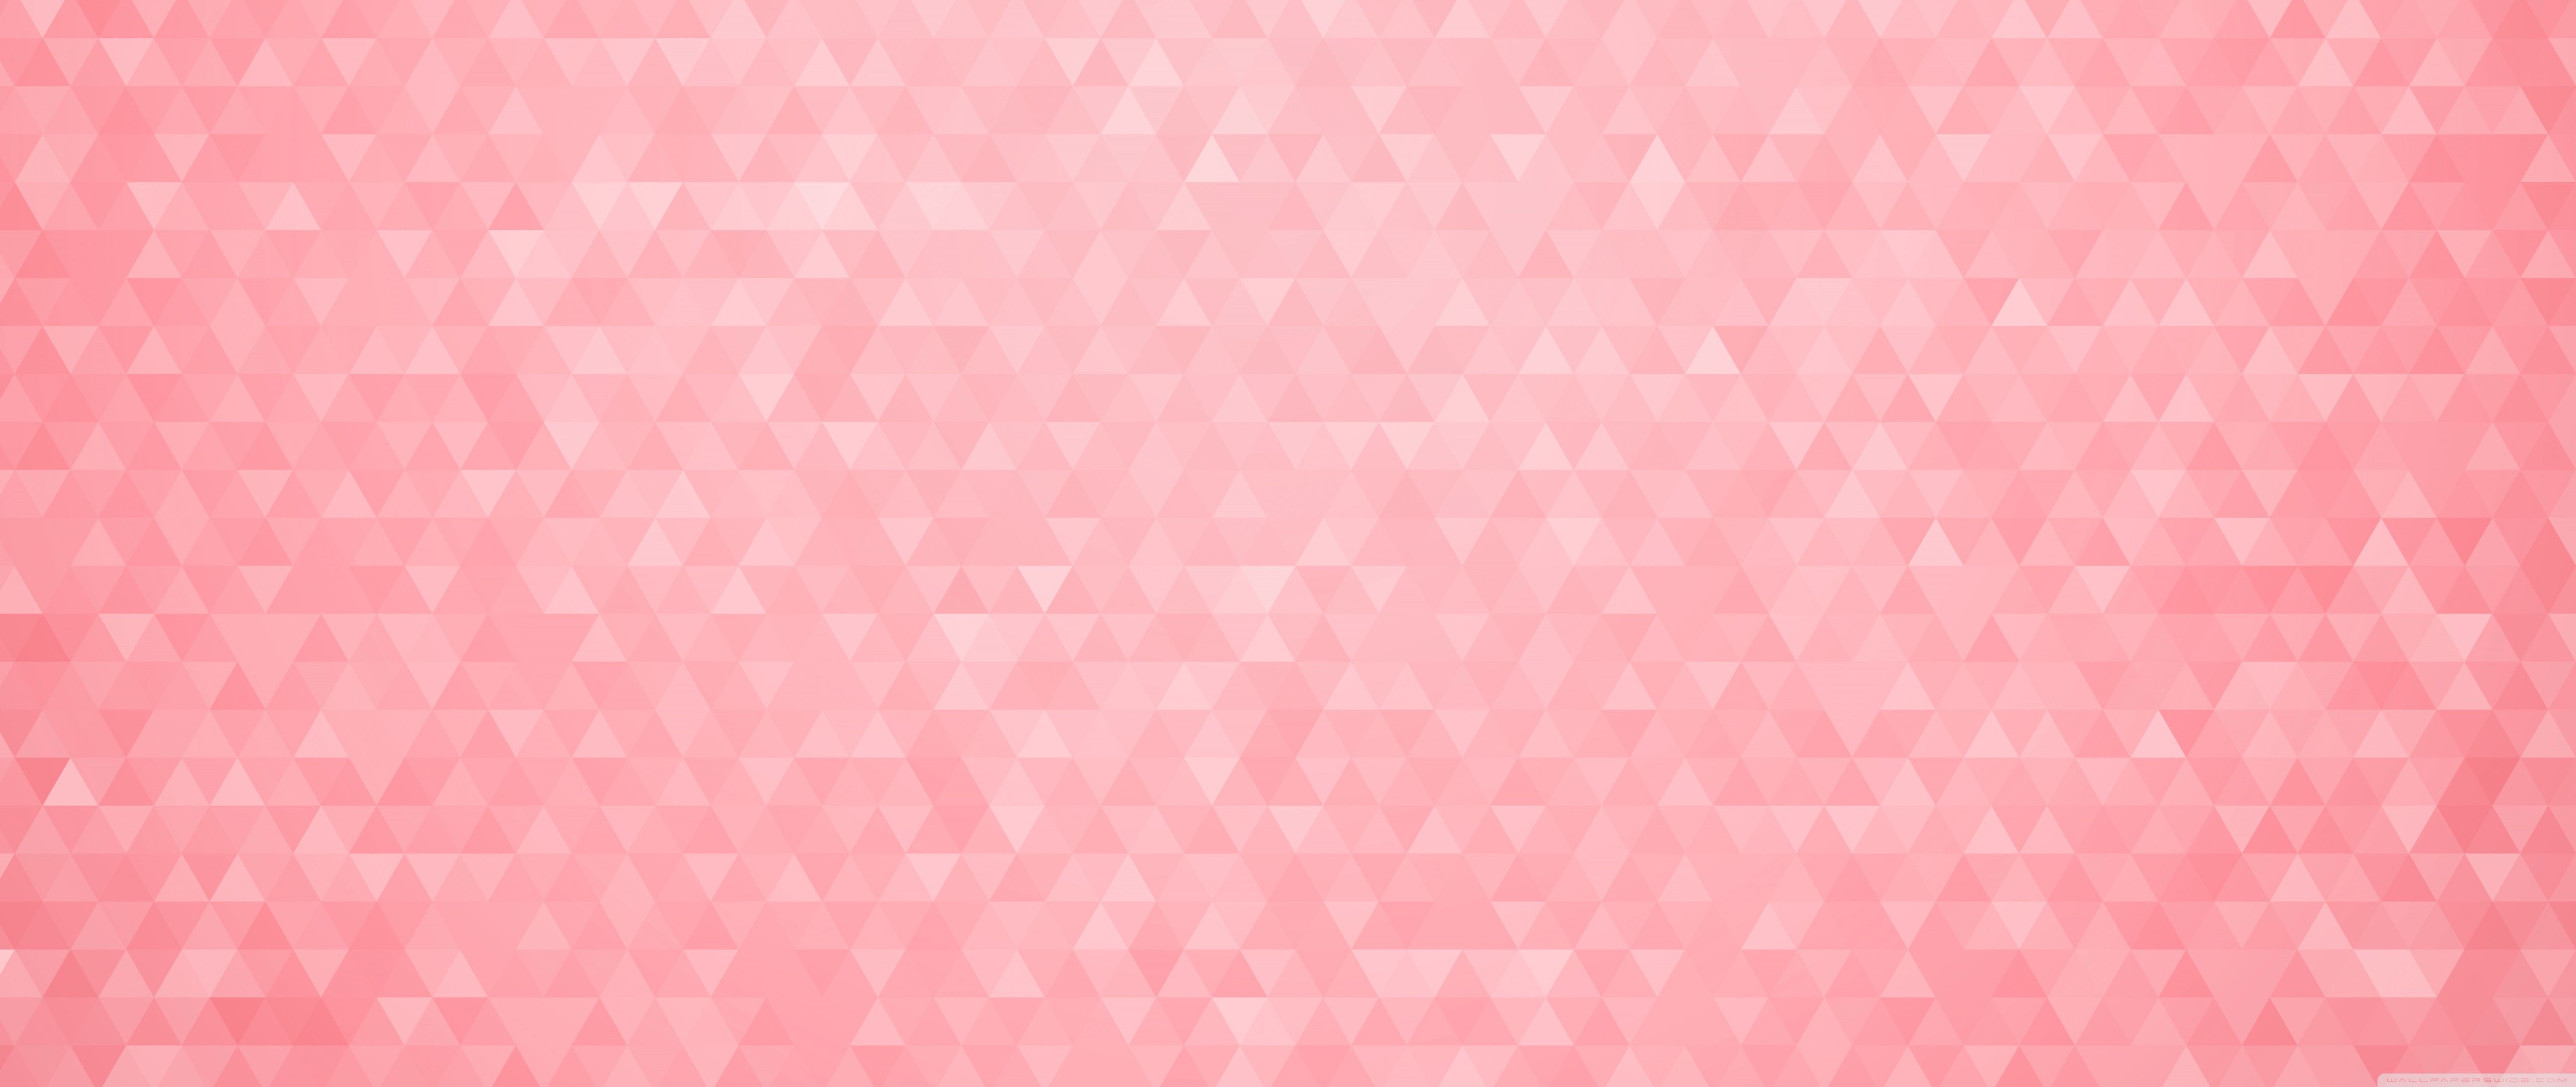 Pink Geometric Wallpaper Free .wallpaperaccess.com